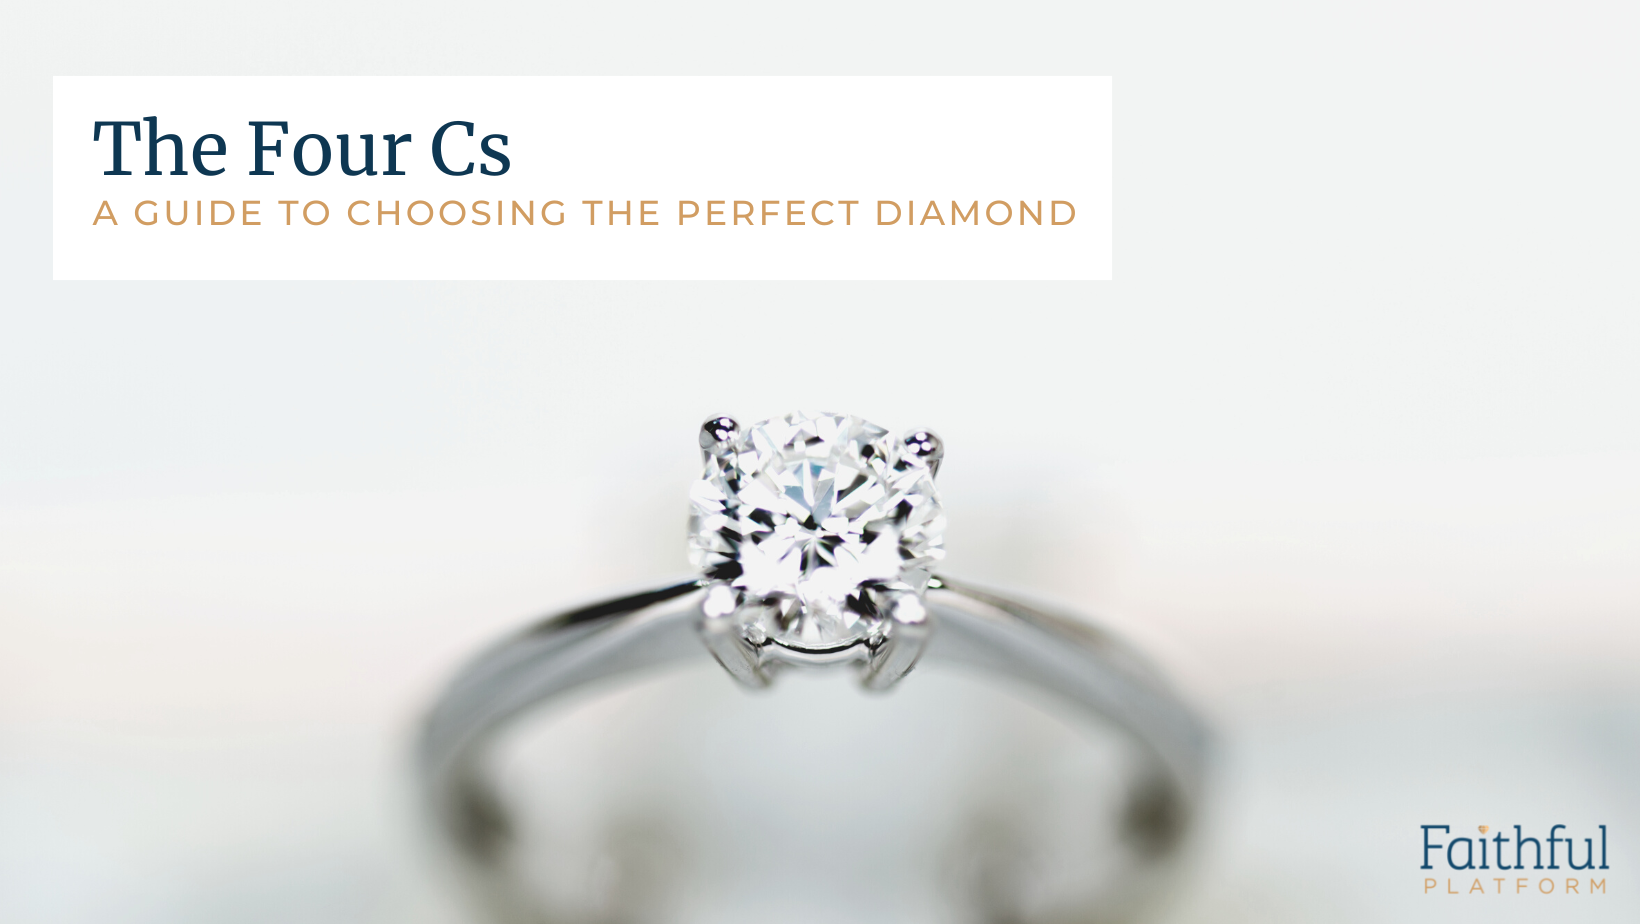 The Four Cs of Diamonds | How to Choose the Perfect Diamond | Diamond Education Guide